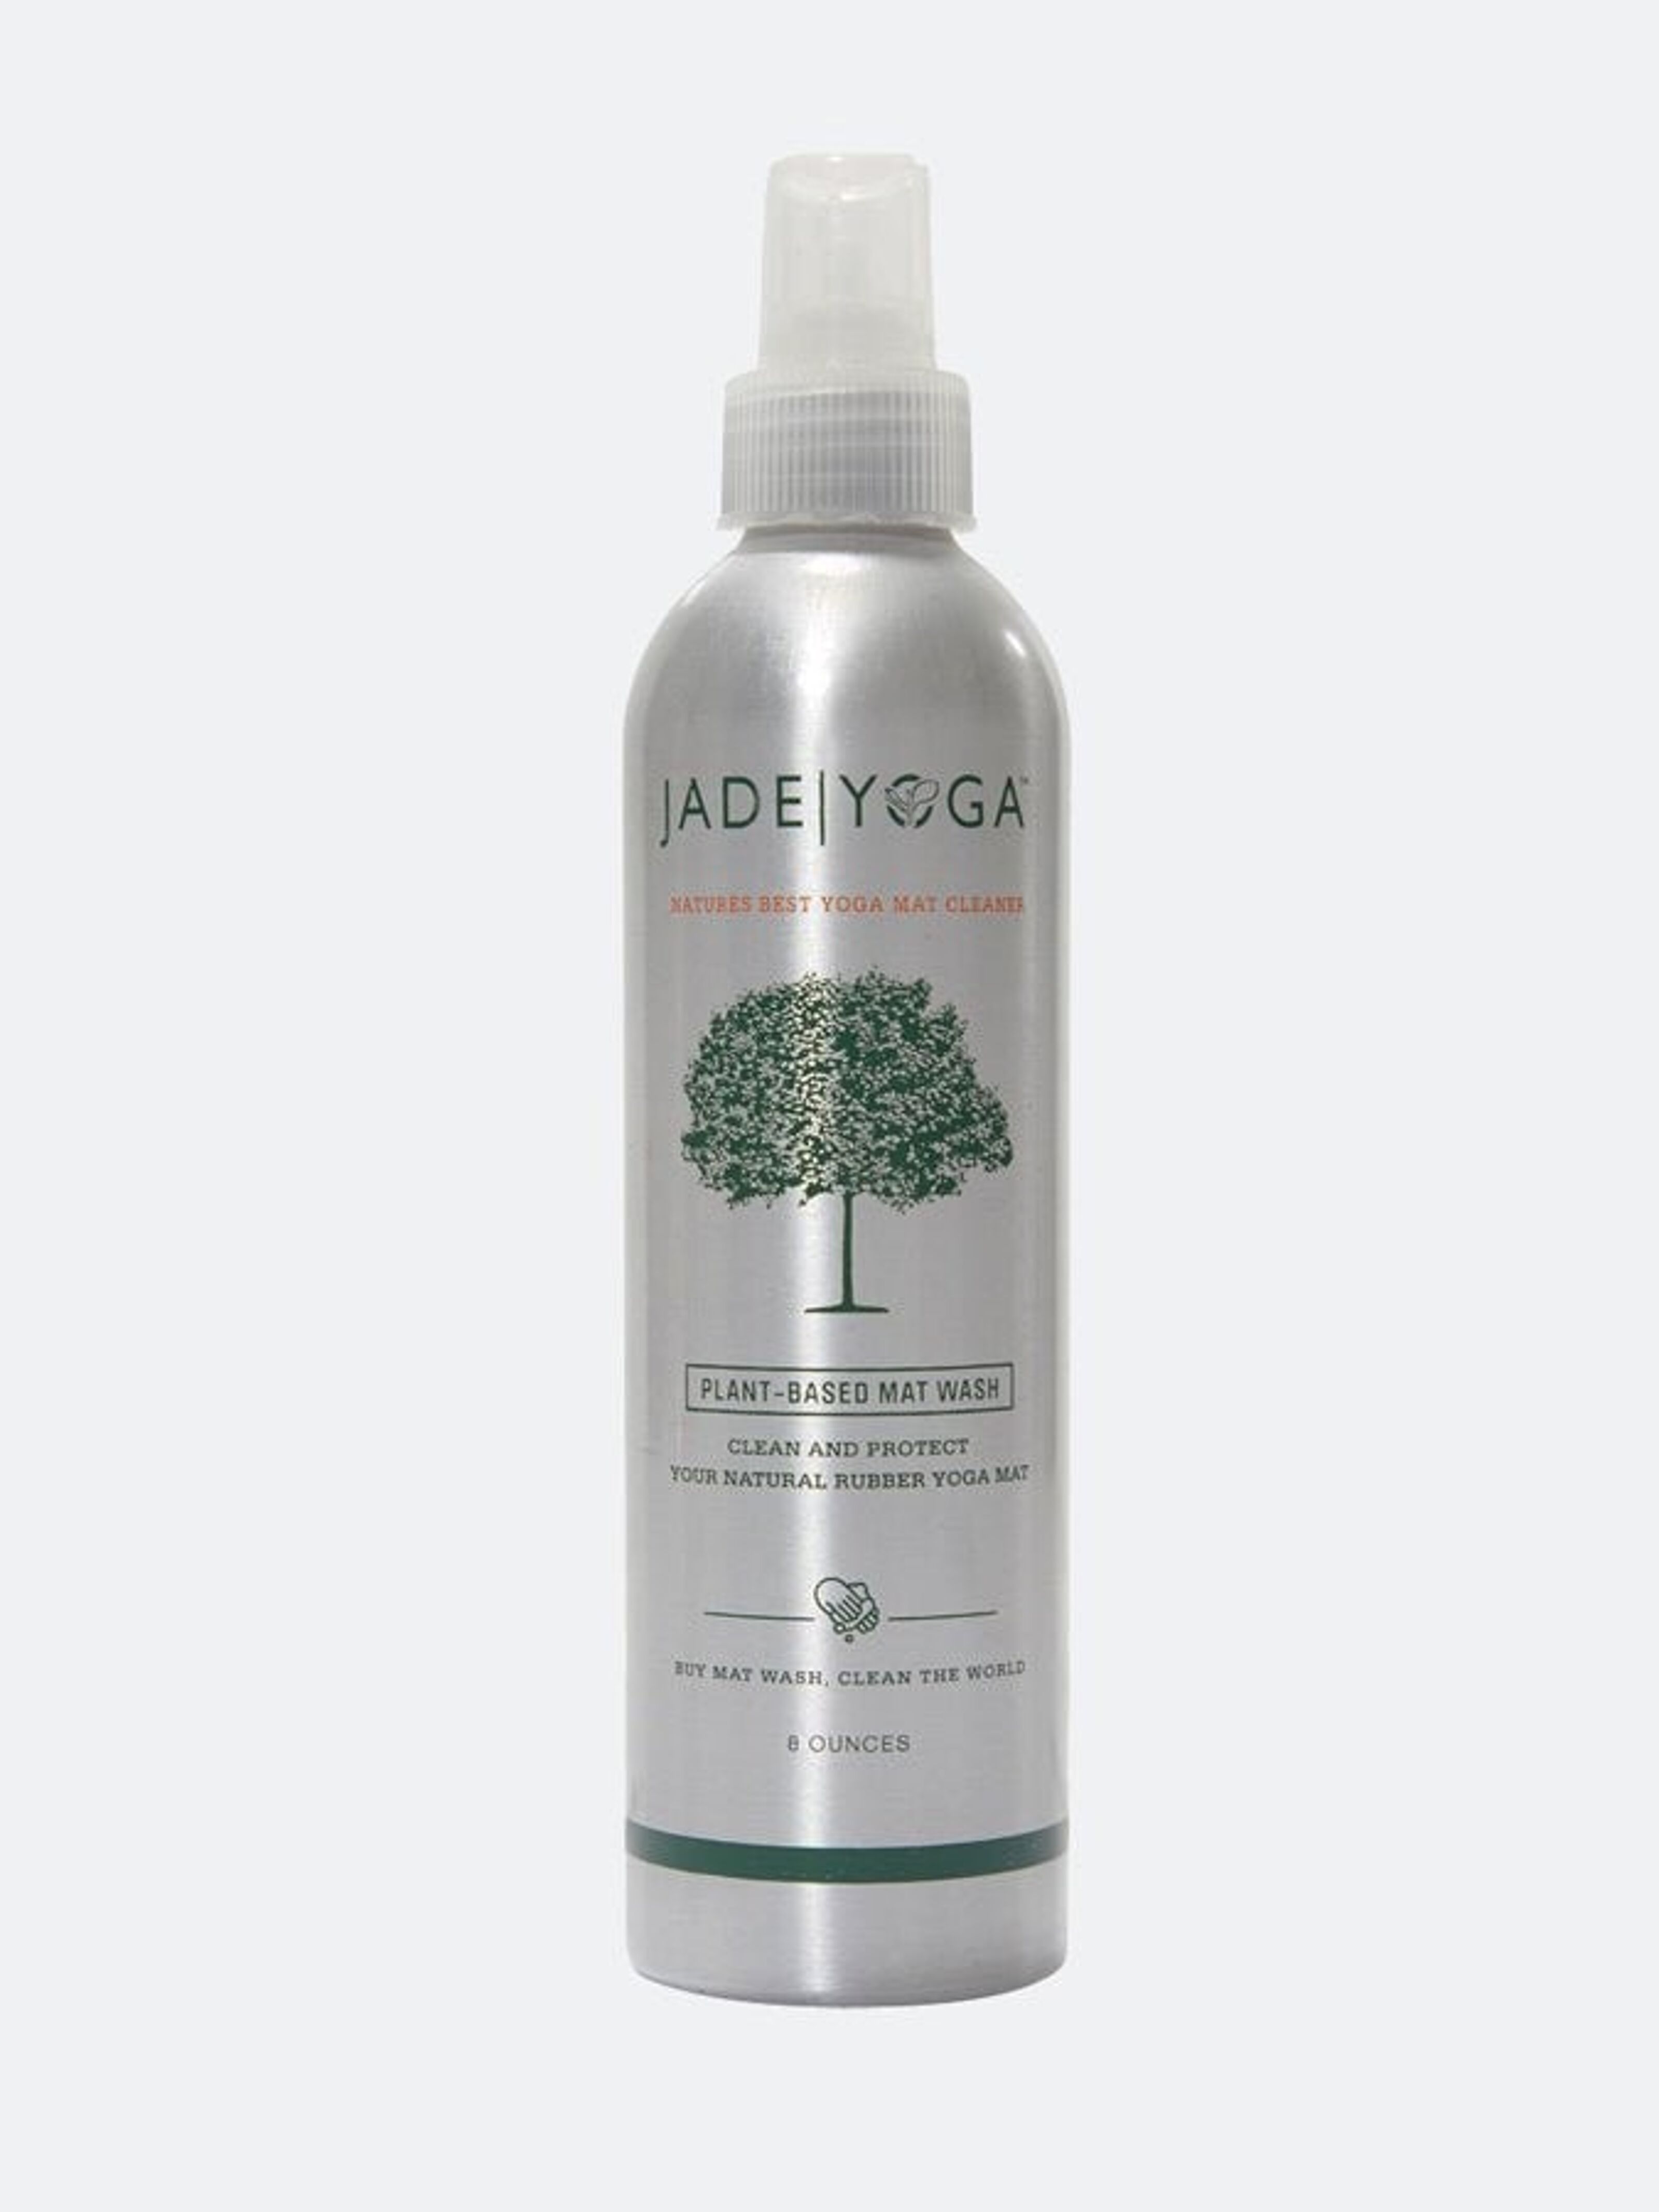 Jade Yoga Plant Based Mat Wash